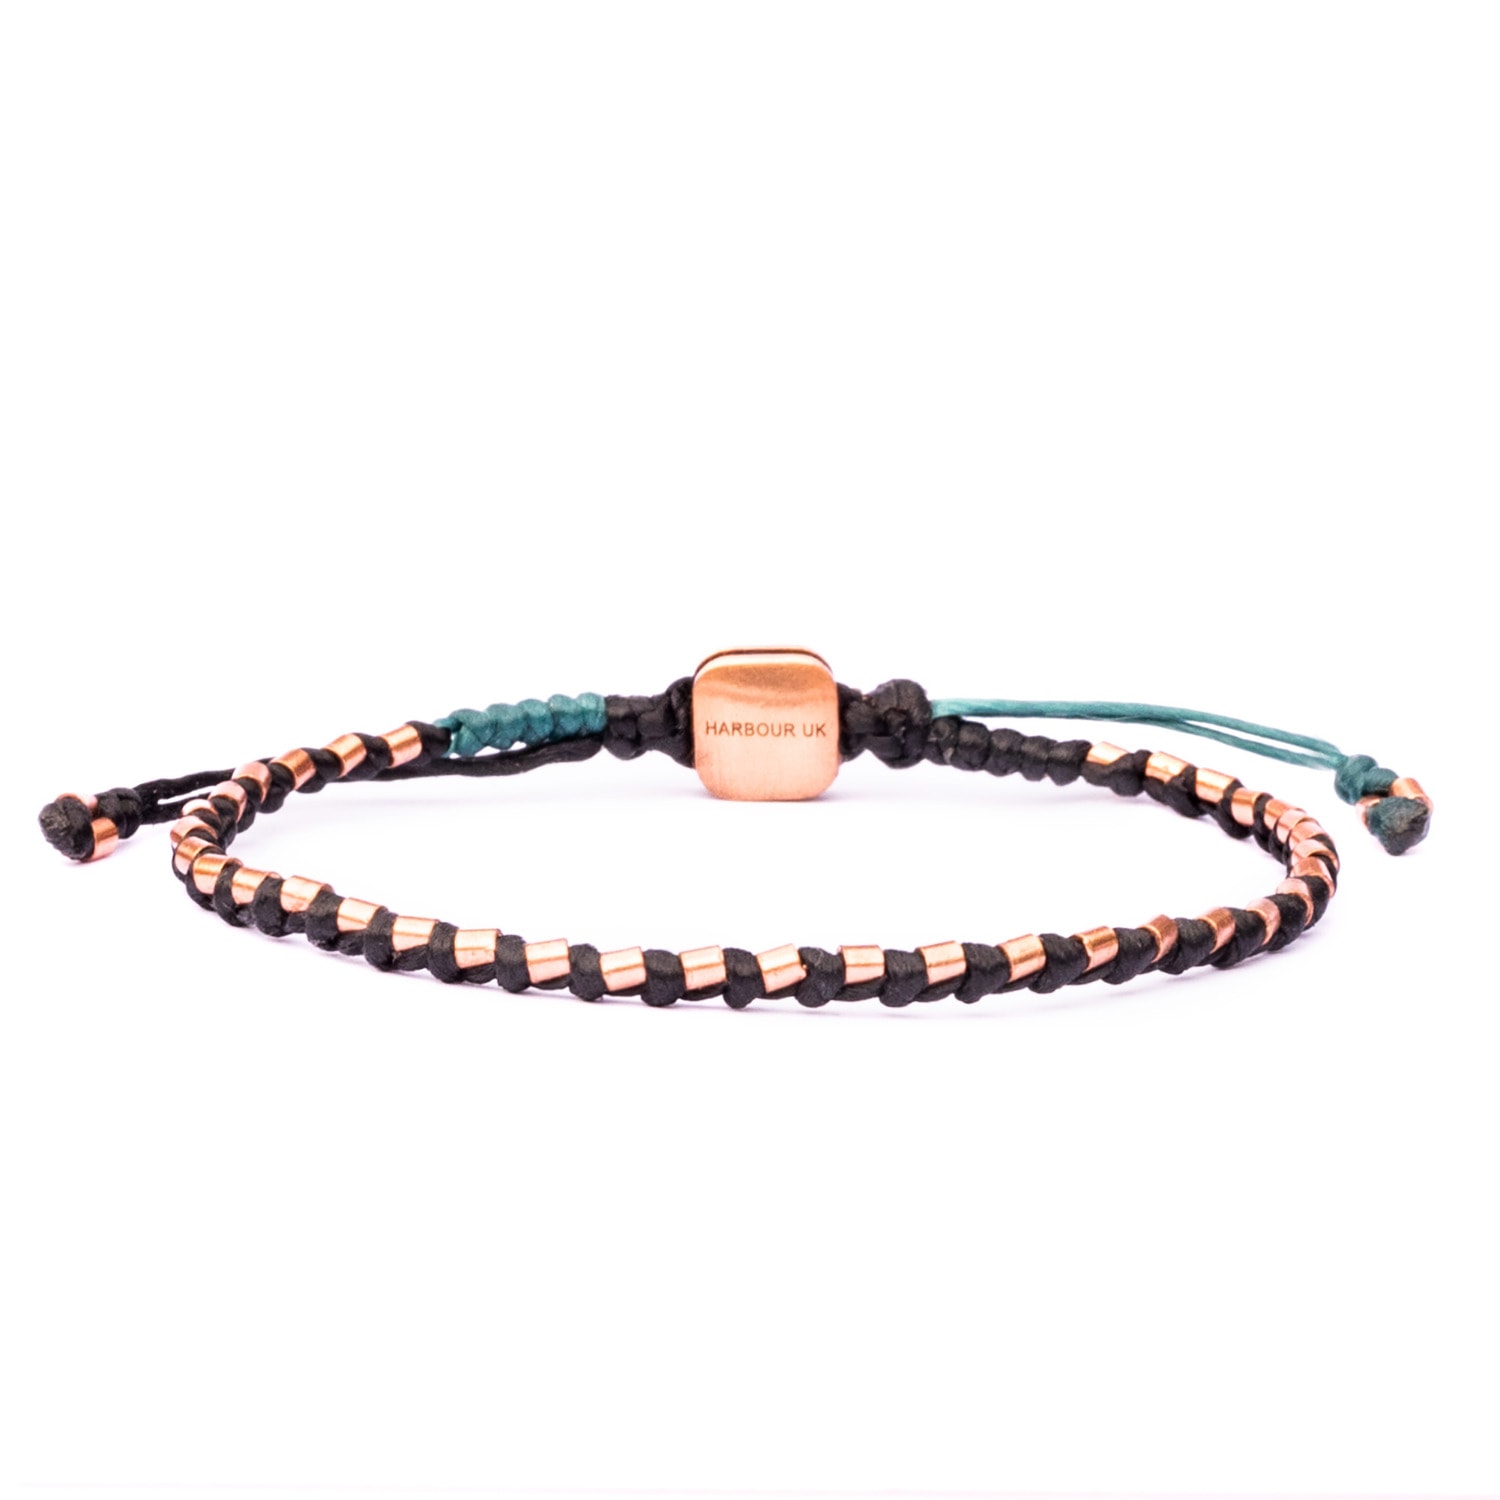 Solid Copper & Black & Aqua Rope Bracelet For Men - Multicolour Harbour UK Bracelets